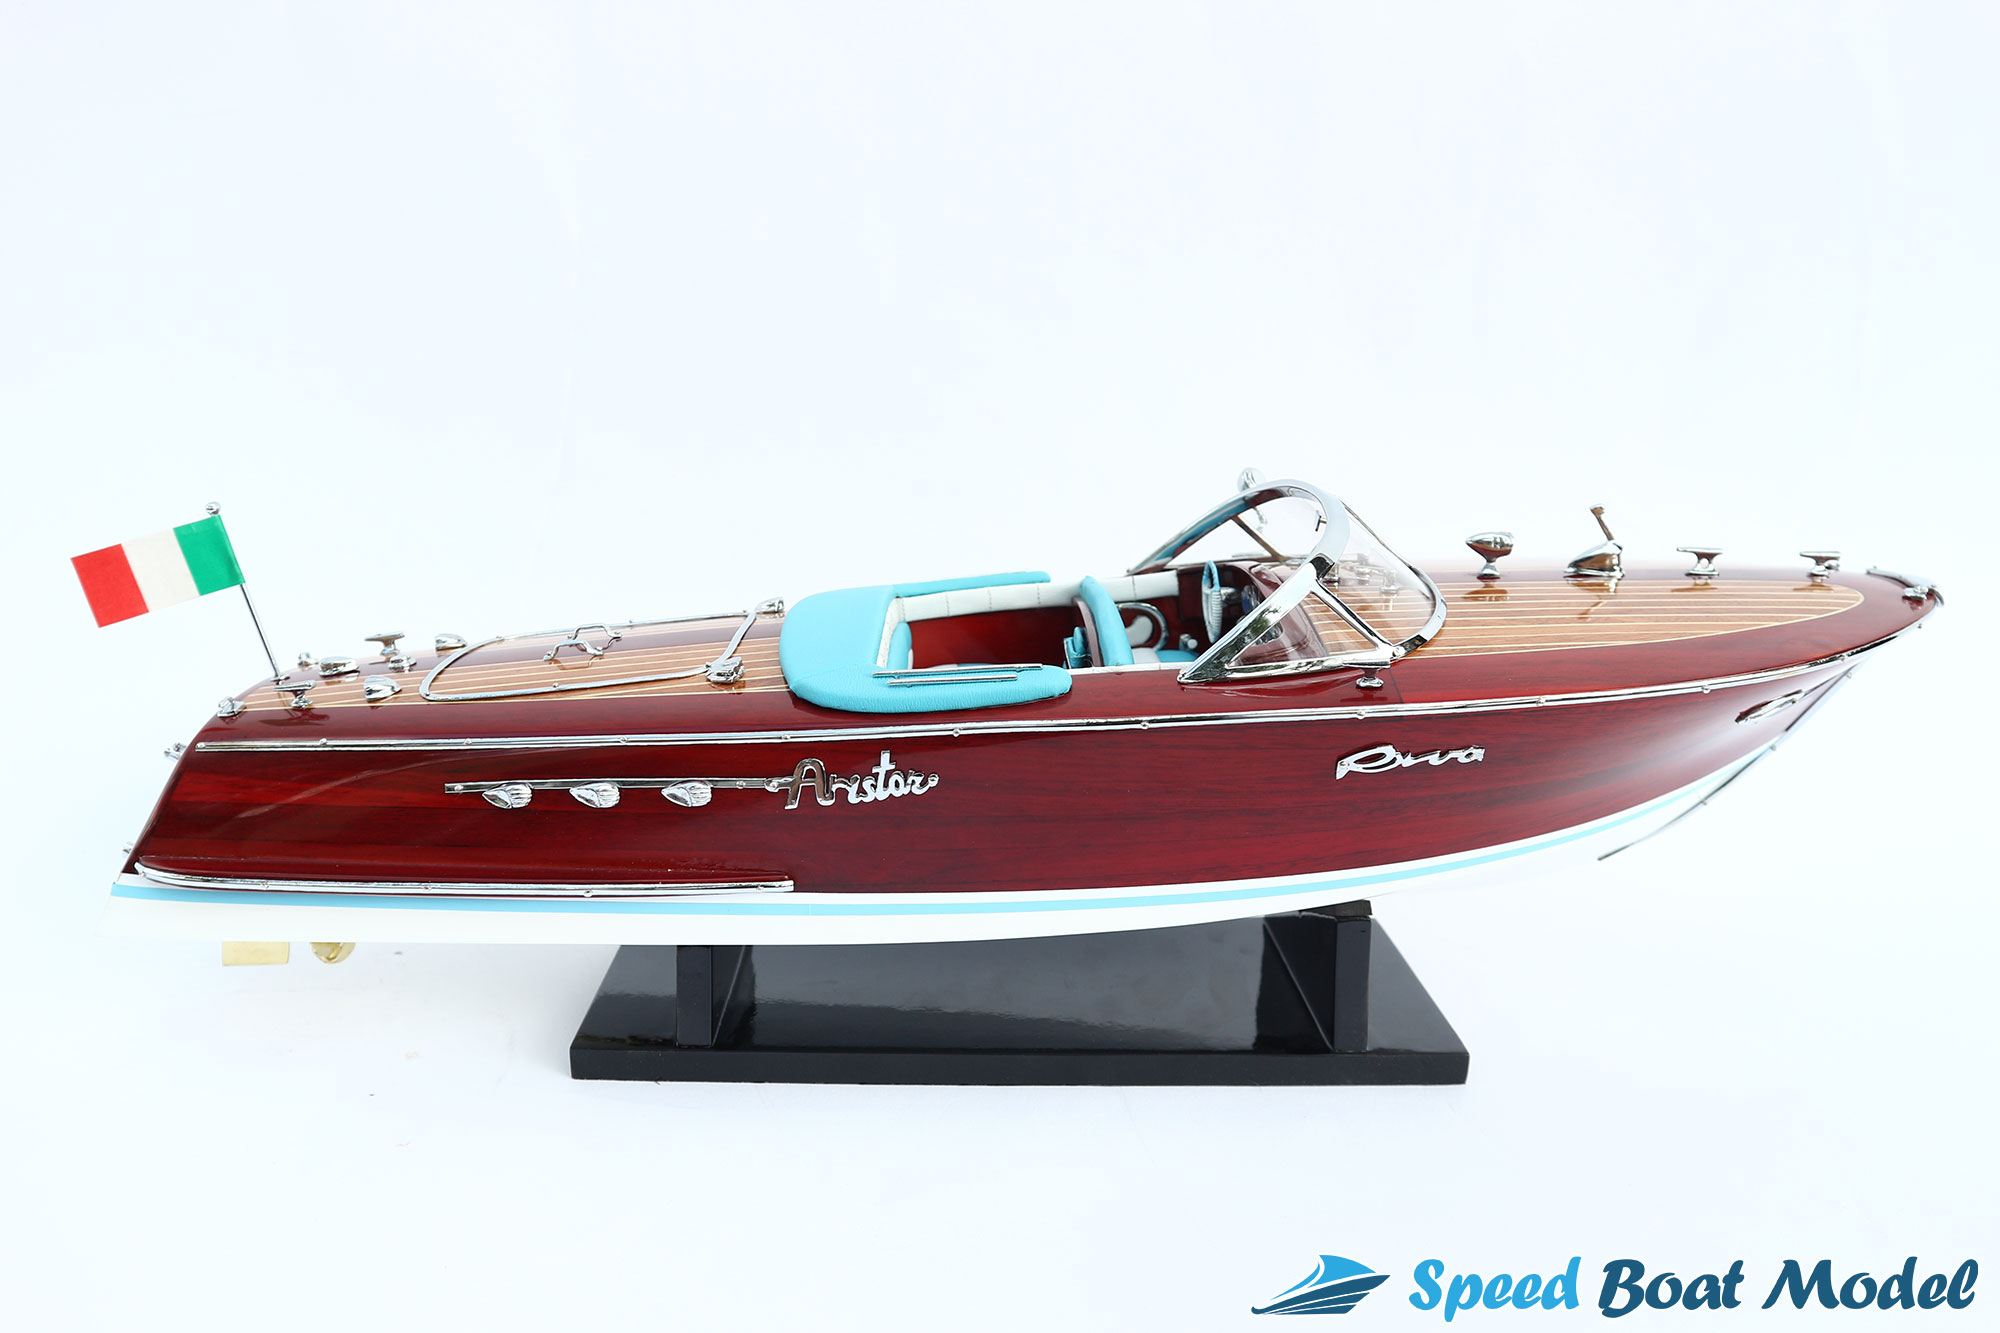 Riva Ariston Classic Speed Boat Model